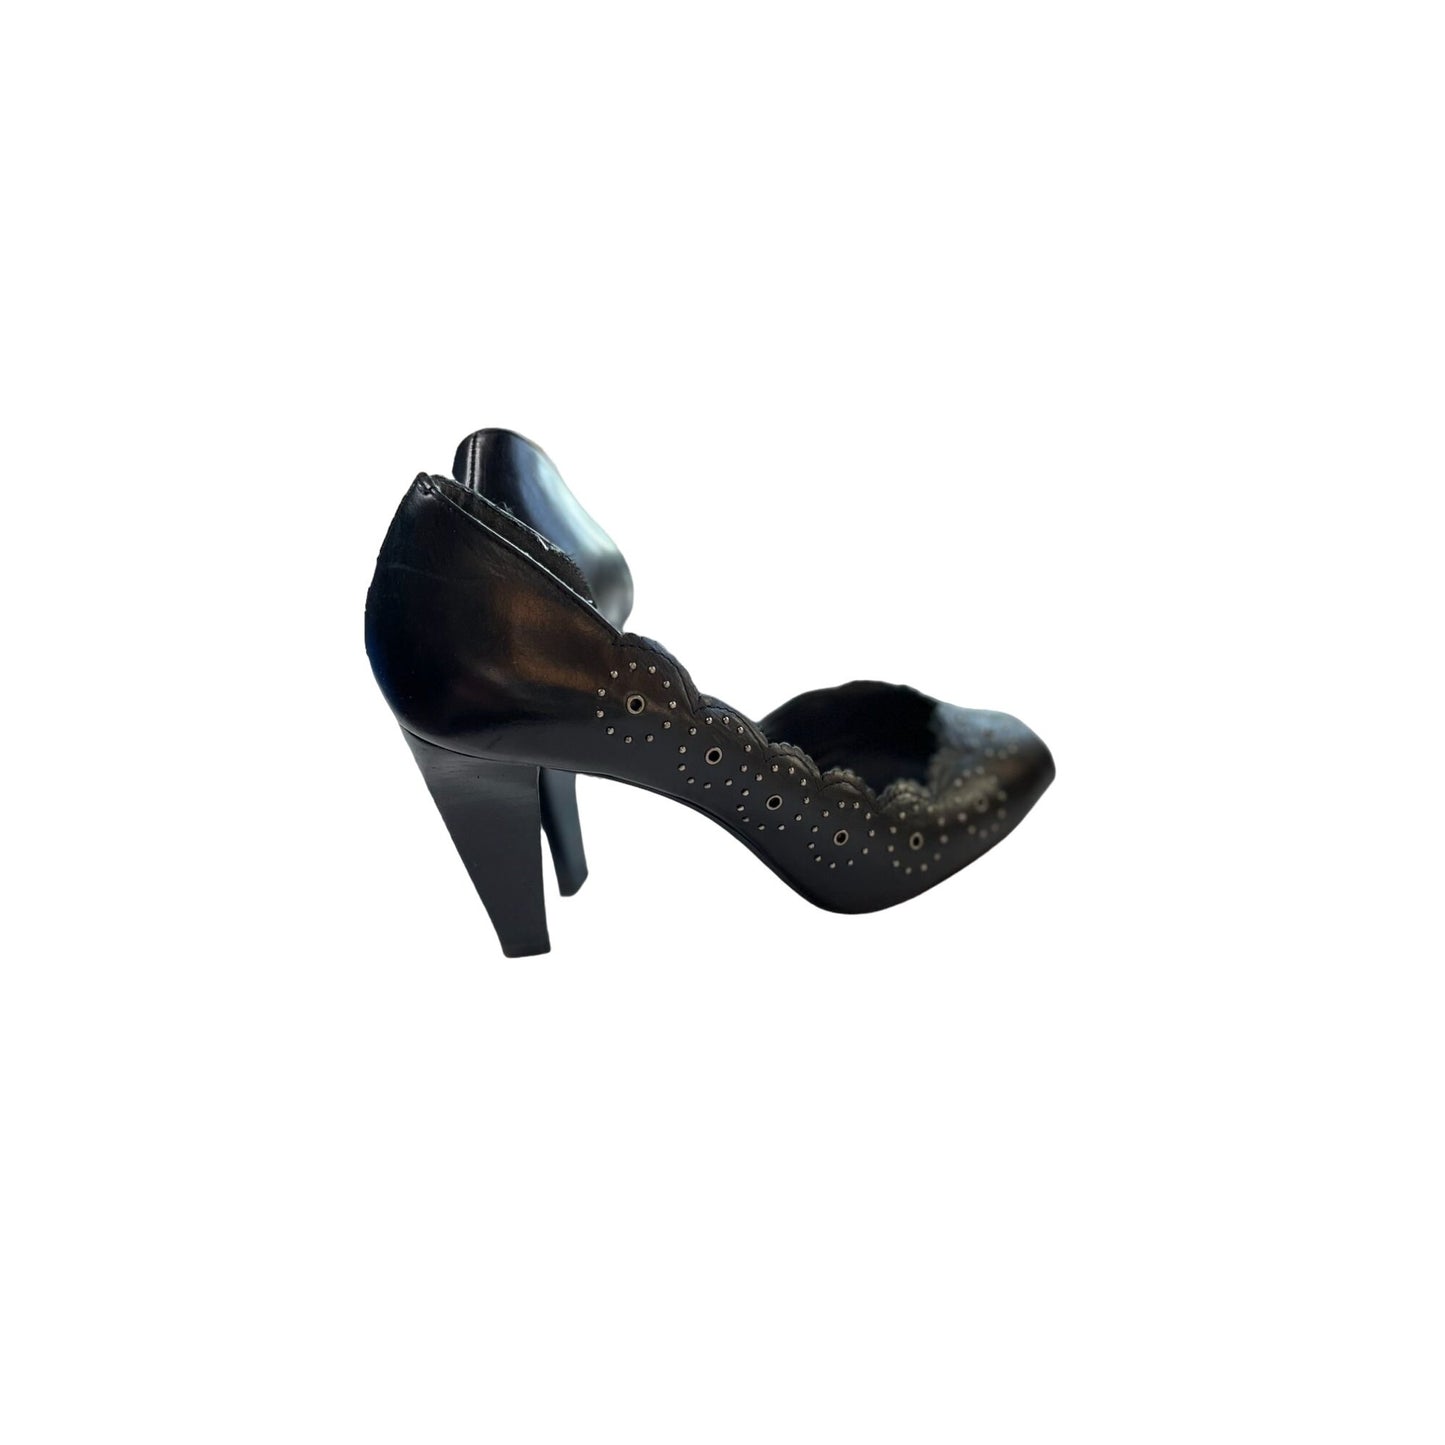 BCBG Max Studio Womens Open Toe Party/Cocktail Stiletto Heels Shoes Size 8M